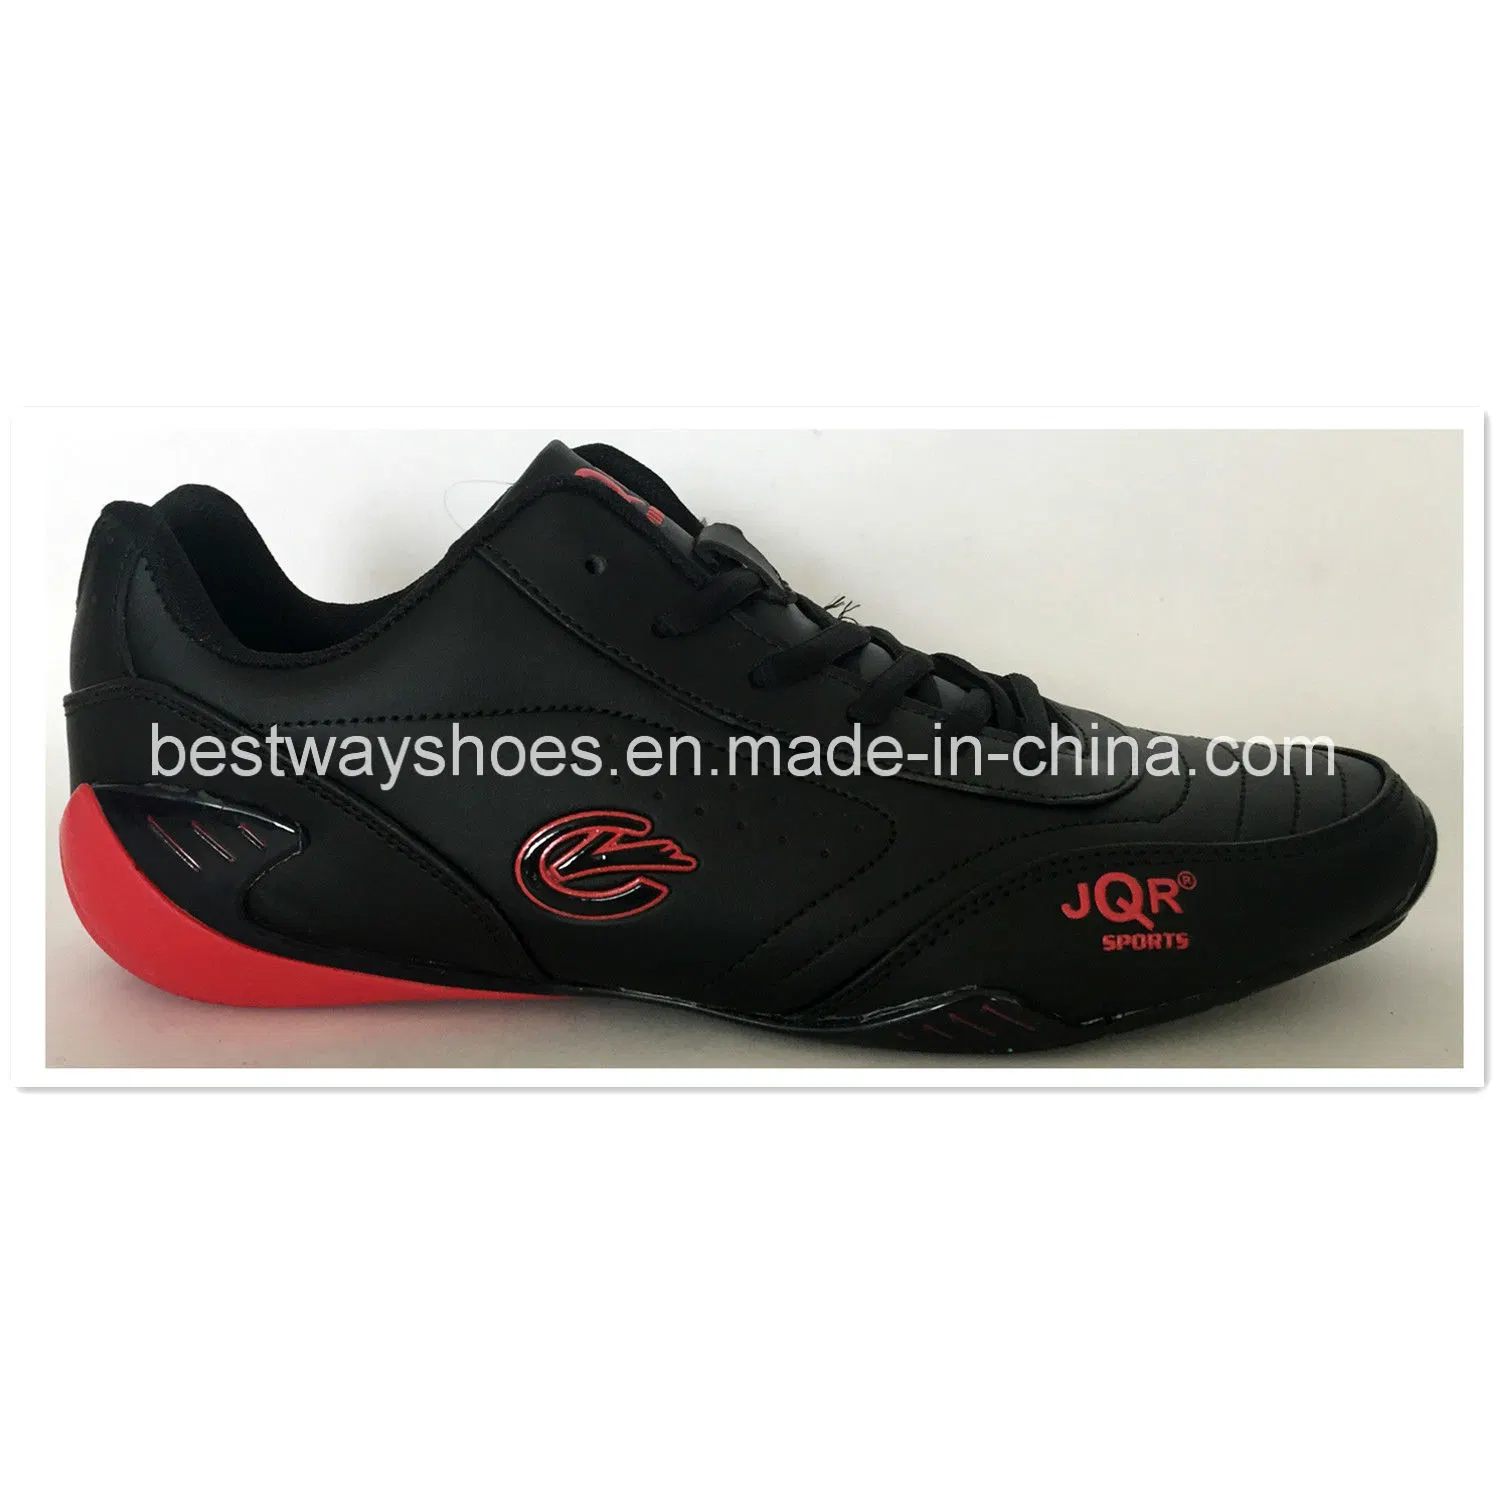 Newest Tideway Sneaker Fashionable Running Training Men Shoes